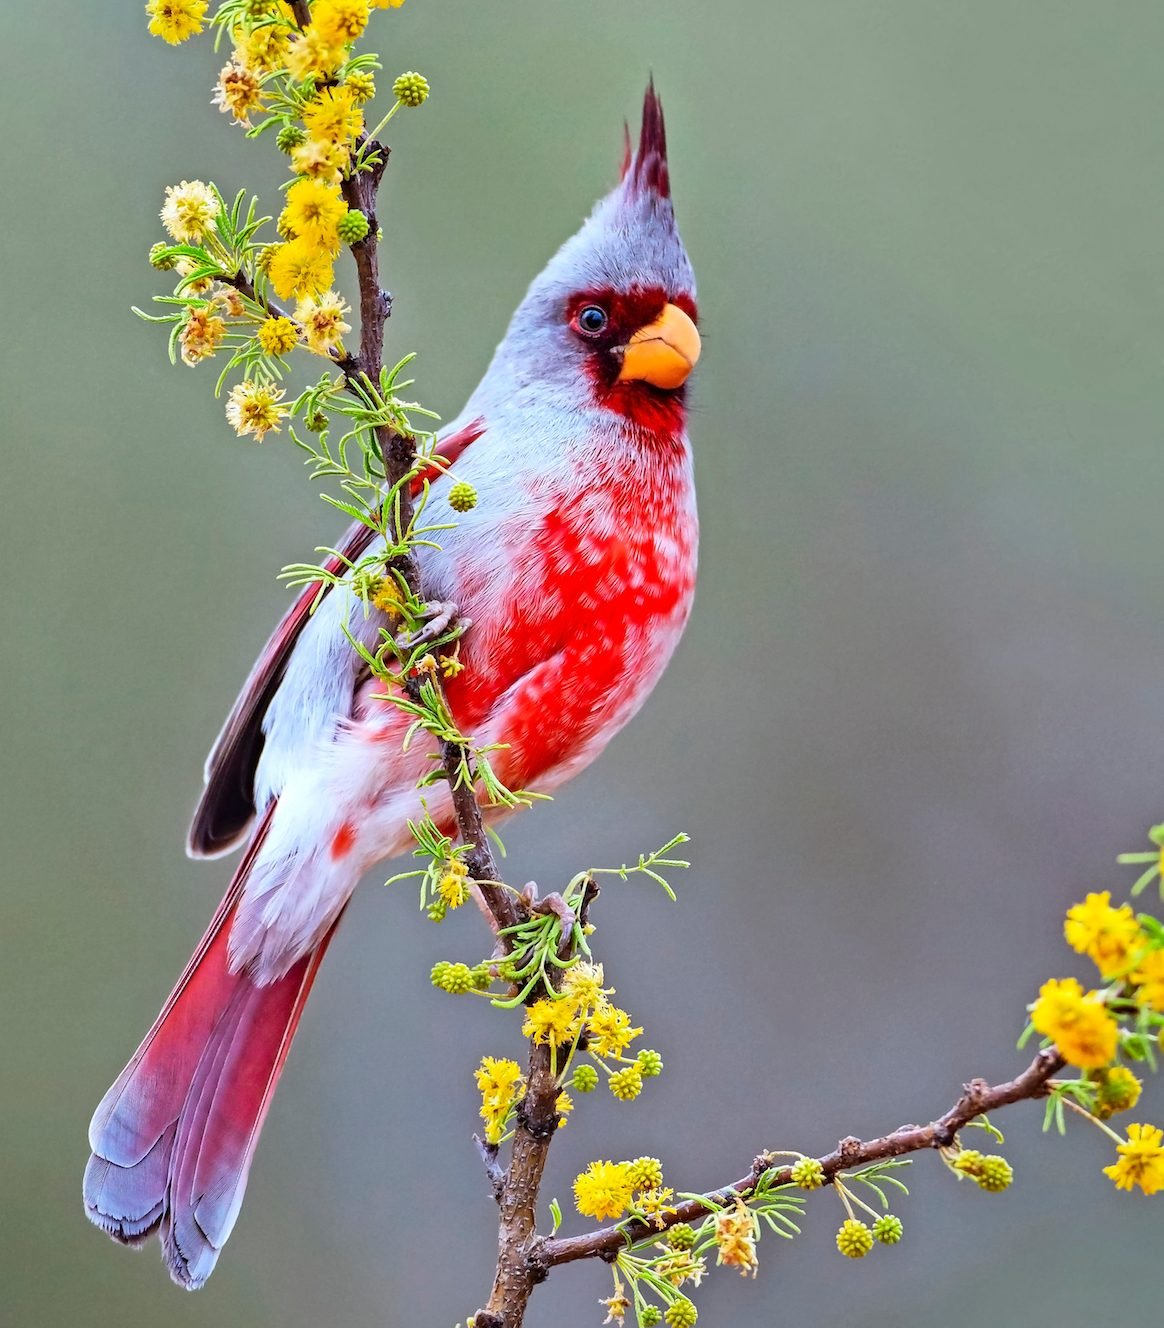 Meet the Pyrrhuloxia: Desert Cardinal of the Southwest